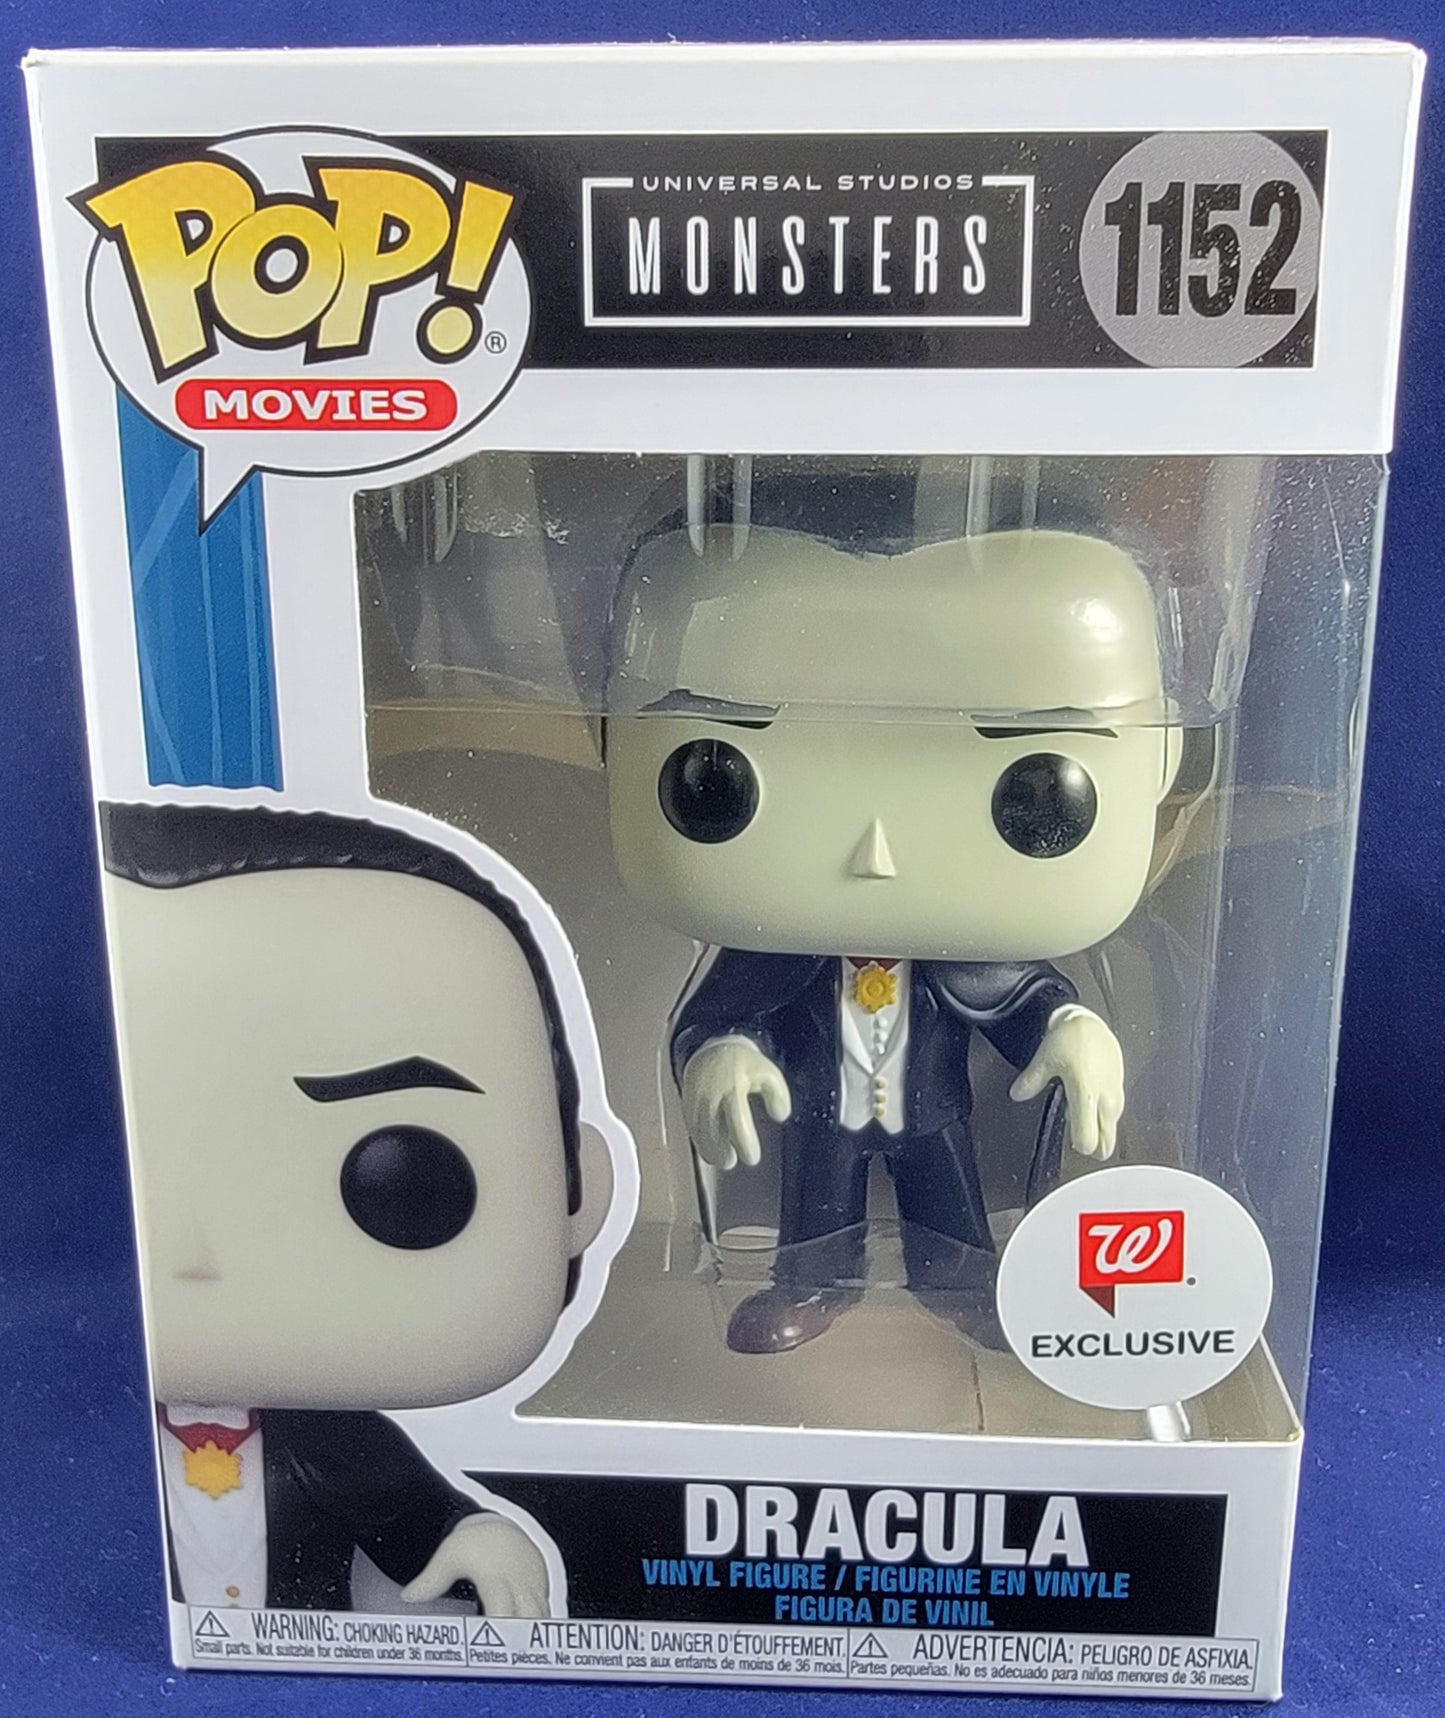 Dracula Walgreens exclusive funko # 1152 (nib)
With pop protector